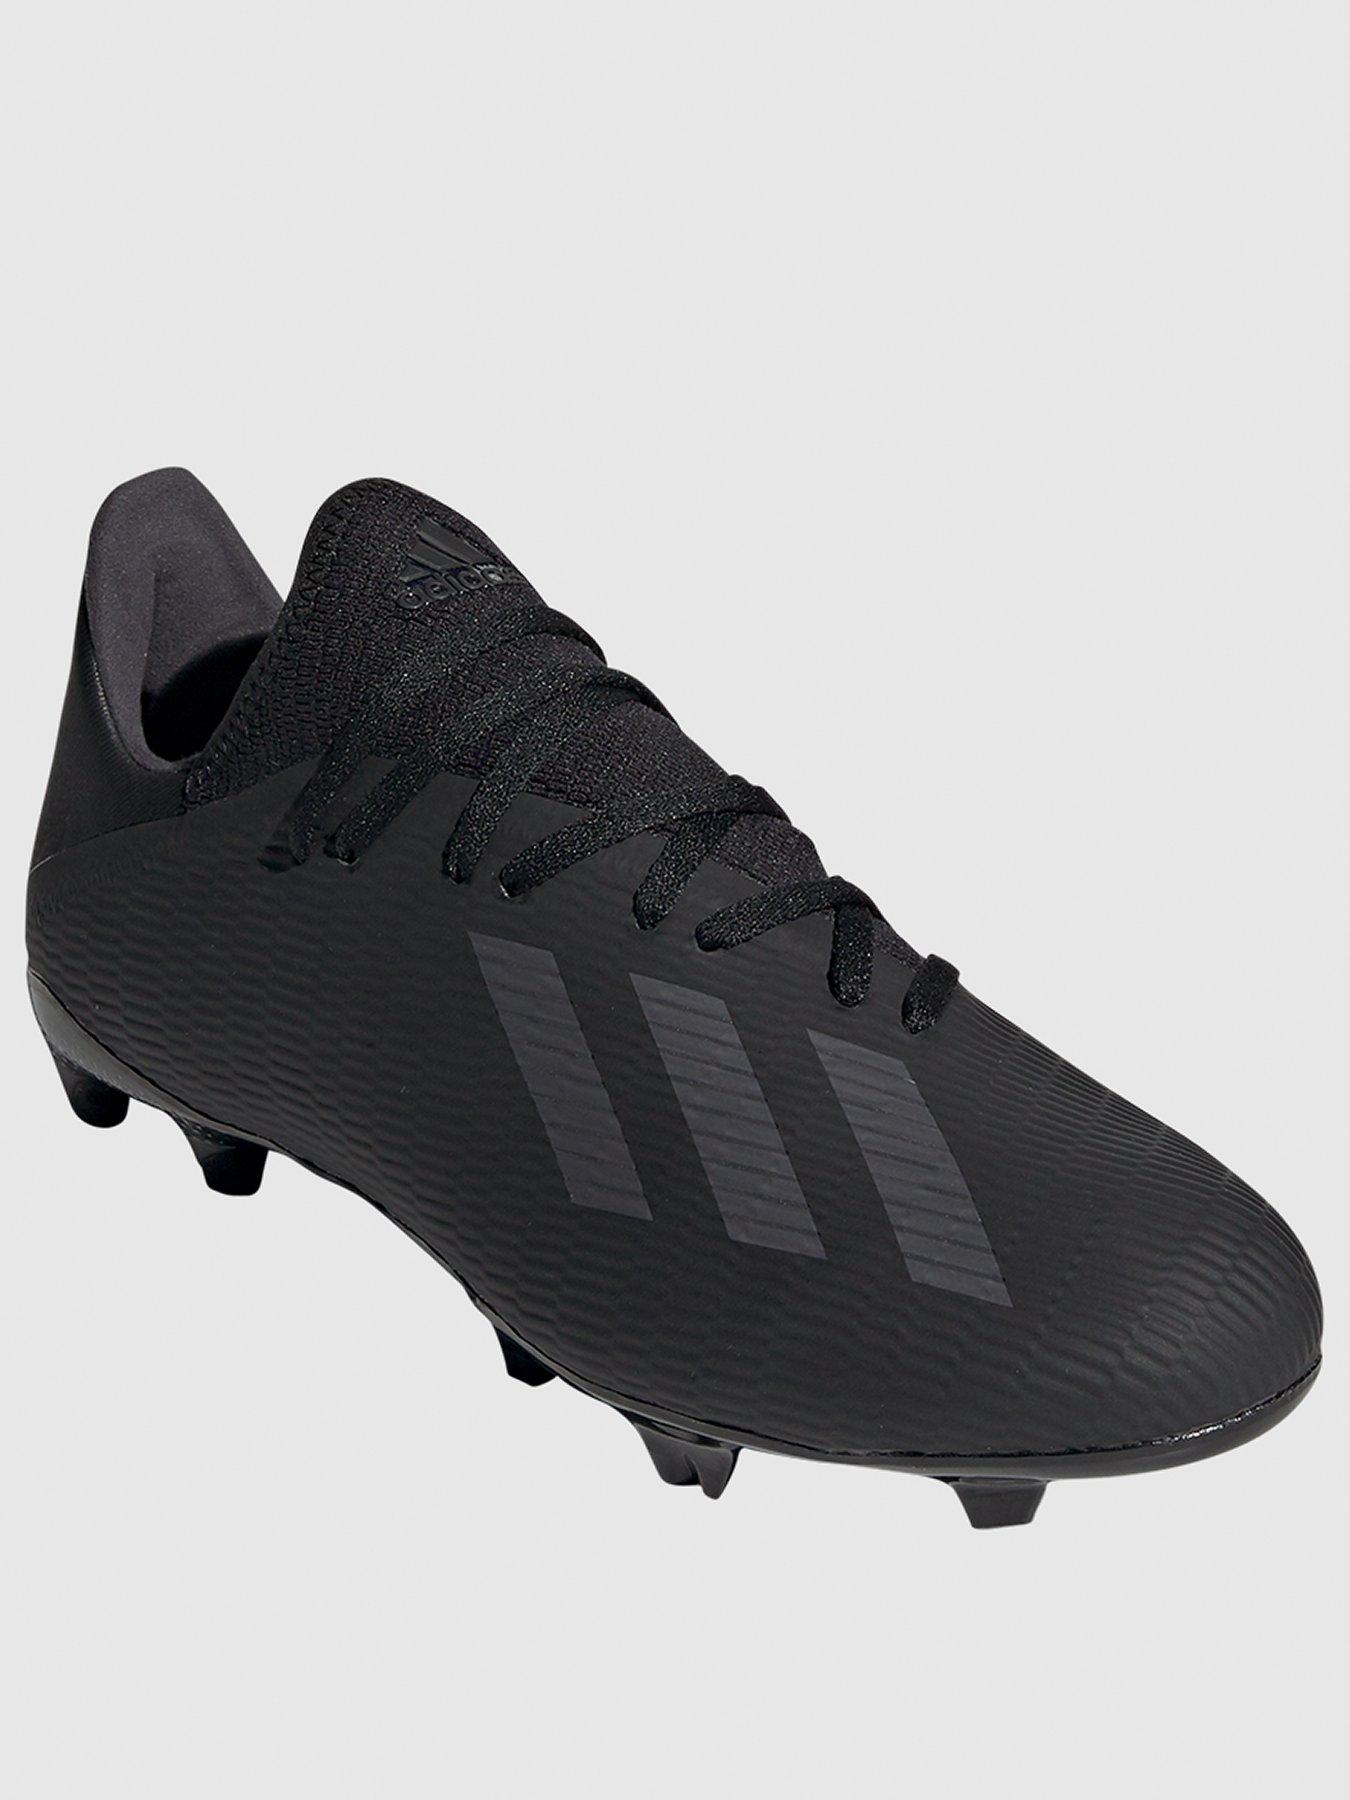 adidas football boots size 6 uk